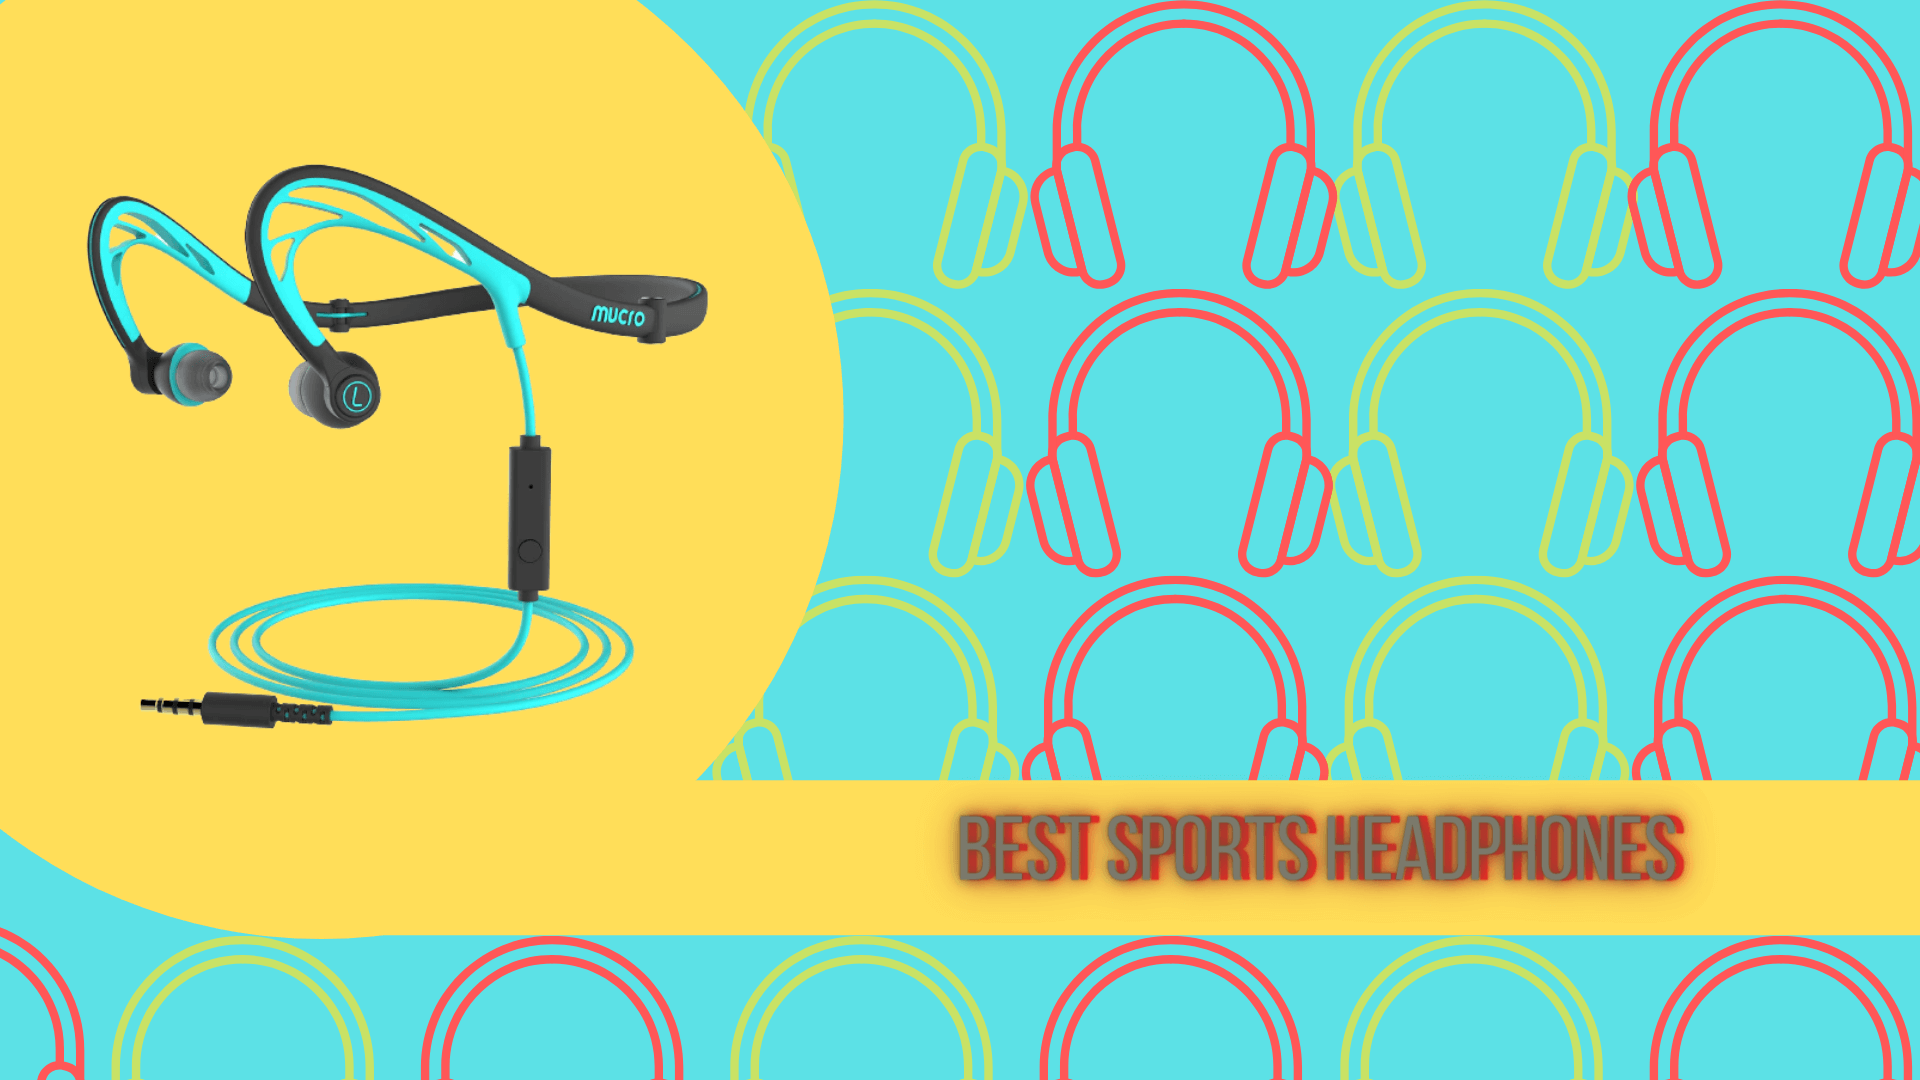 Best Sports Headphones